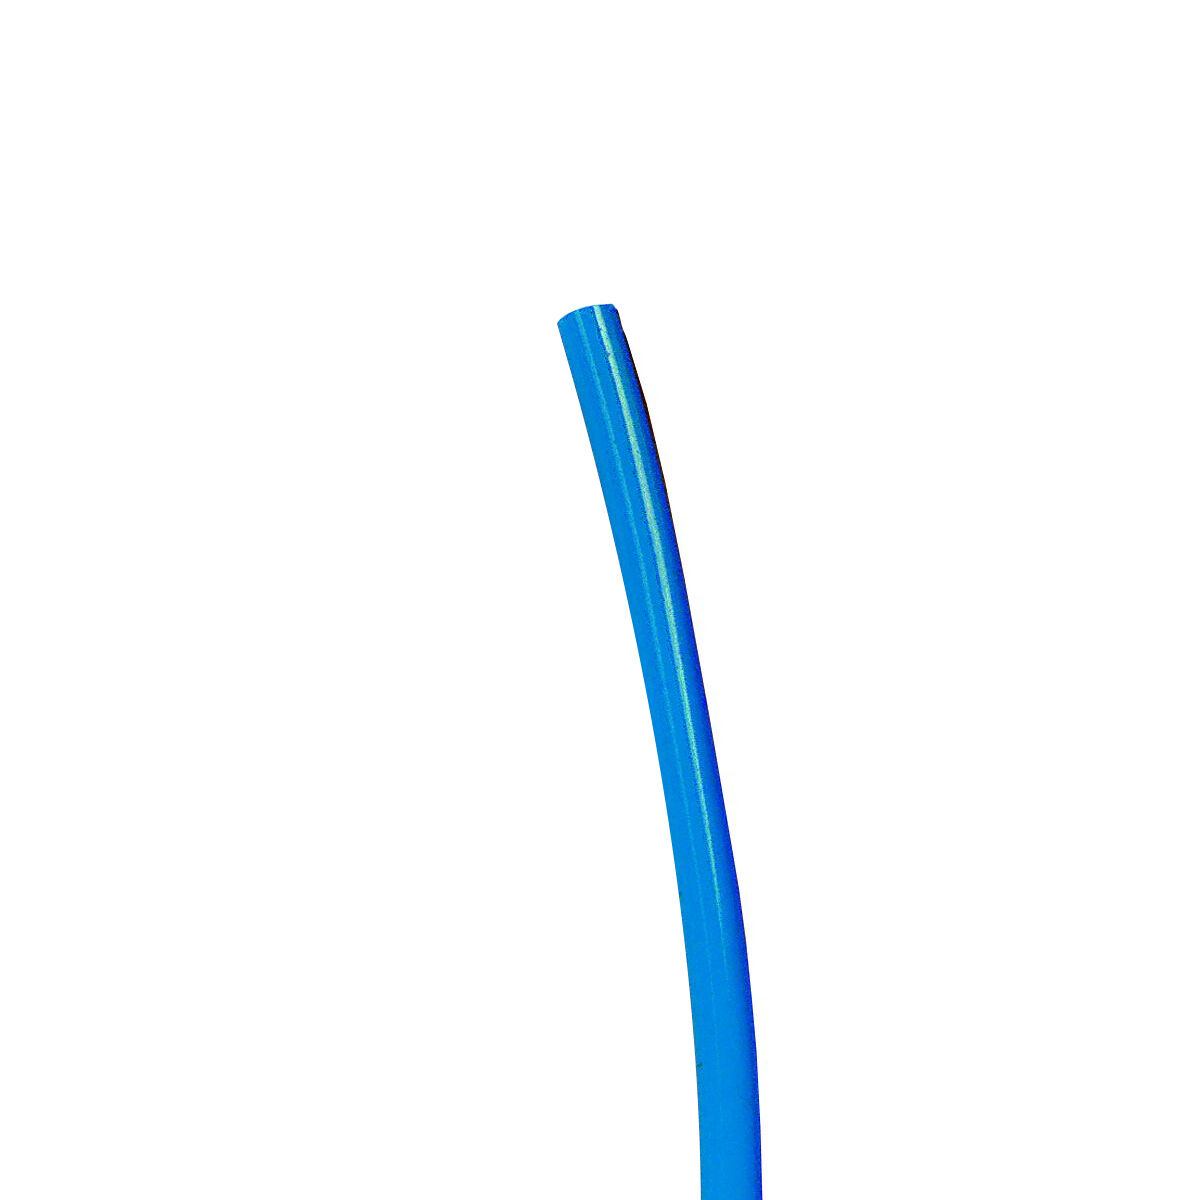 Tuyau en polyuréthane (PUR) bleu / Tuyau Ø extérieur 8 mm / marchandise au mètre